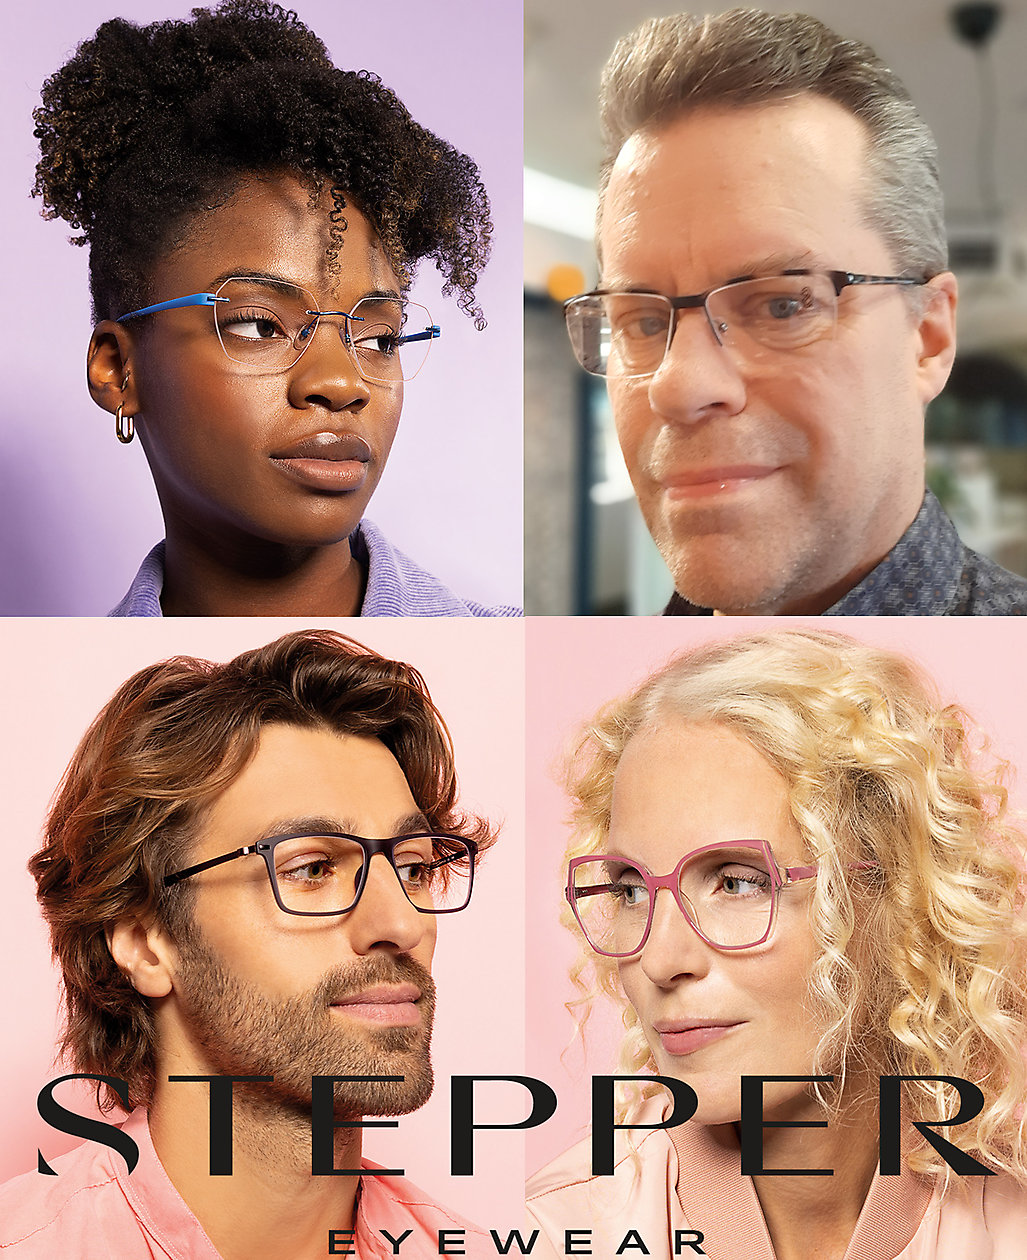 Merk van de maand: Stepper Eyewear Fieret Optiek